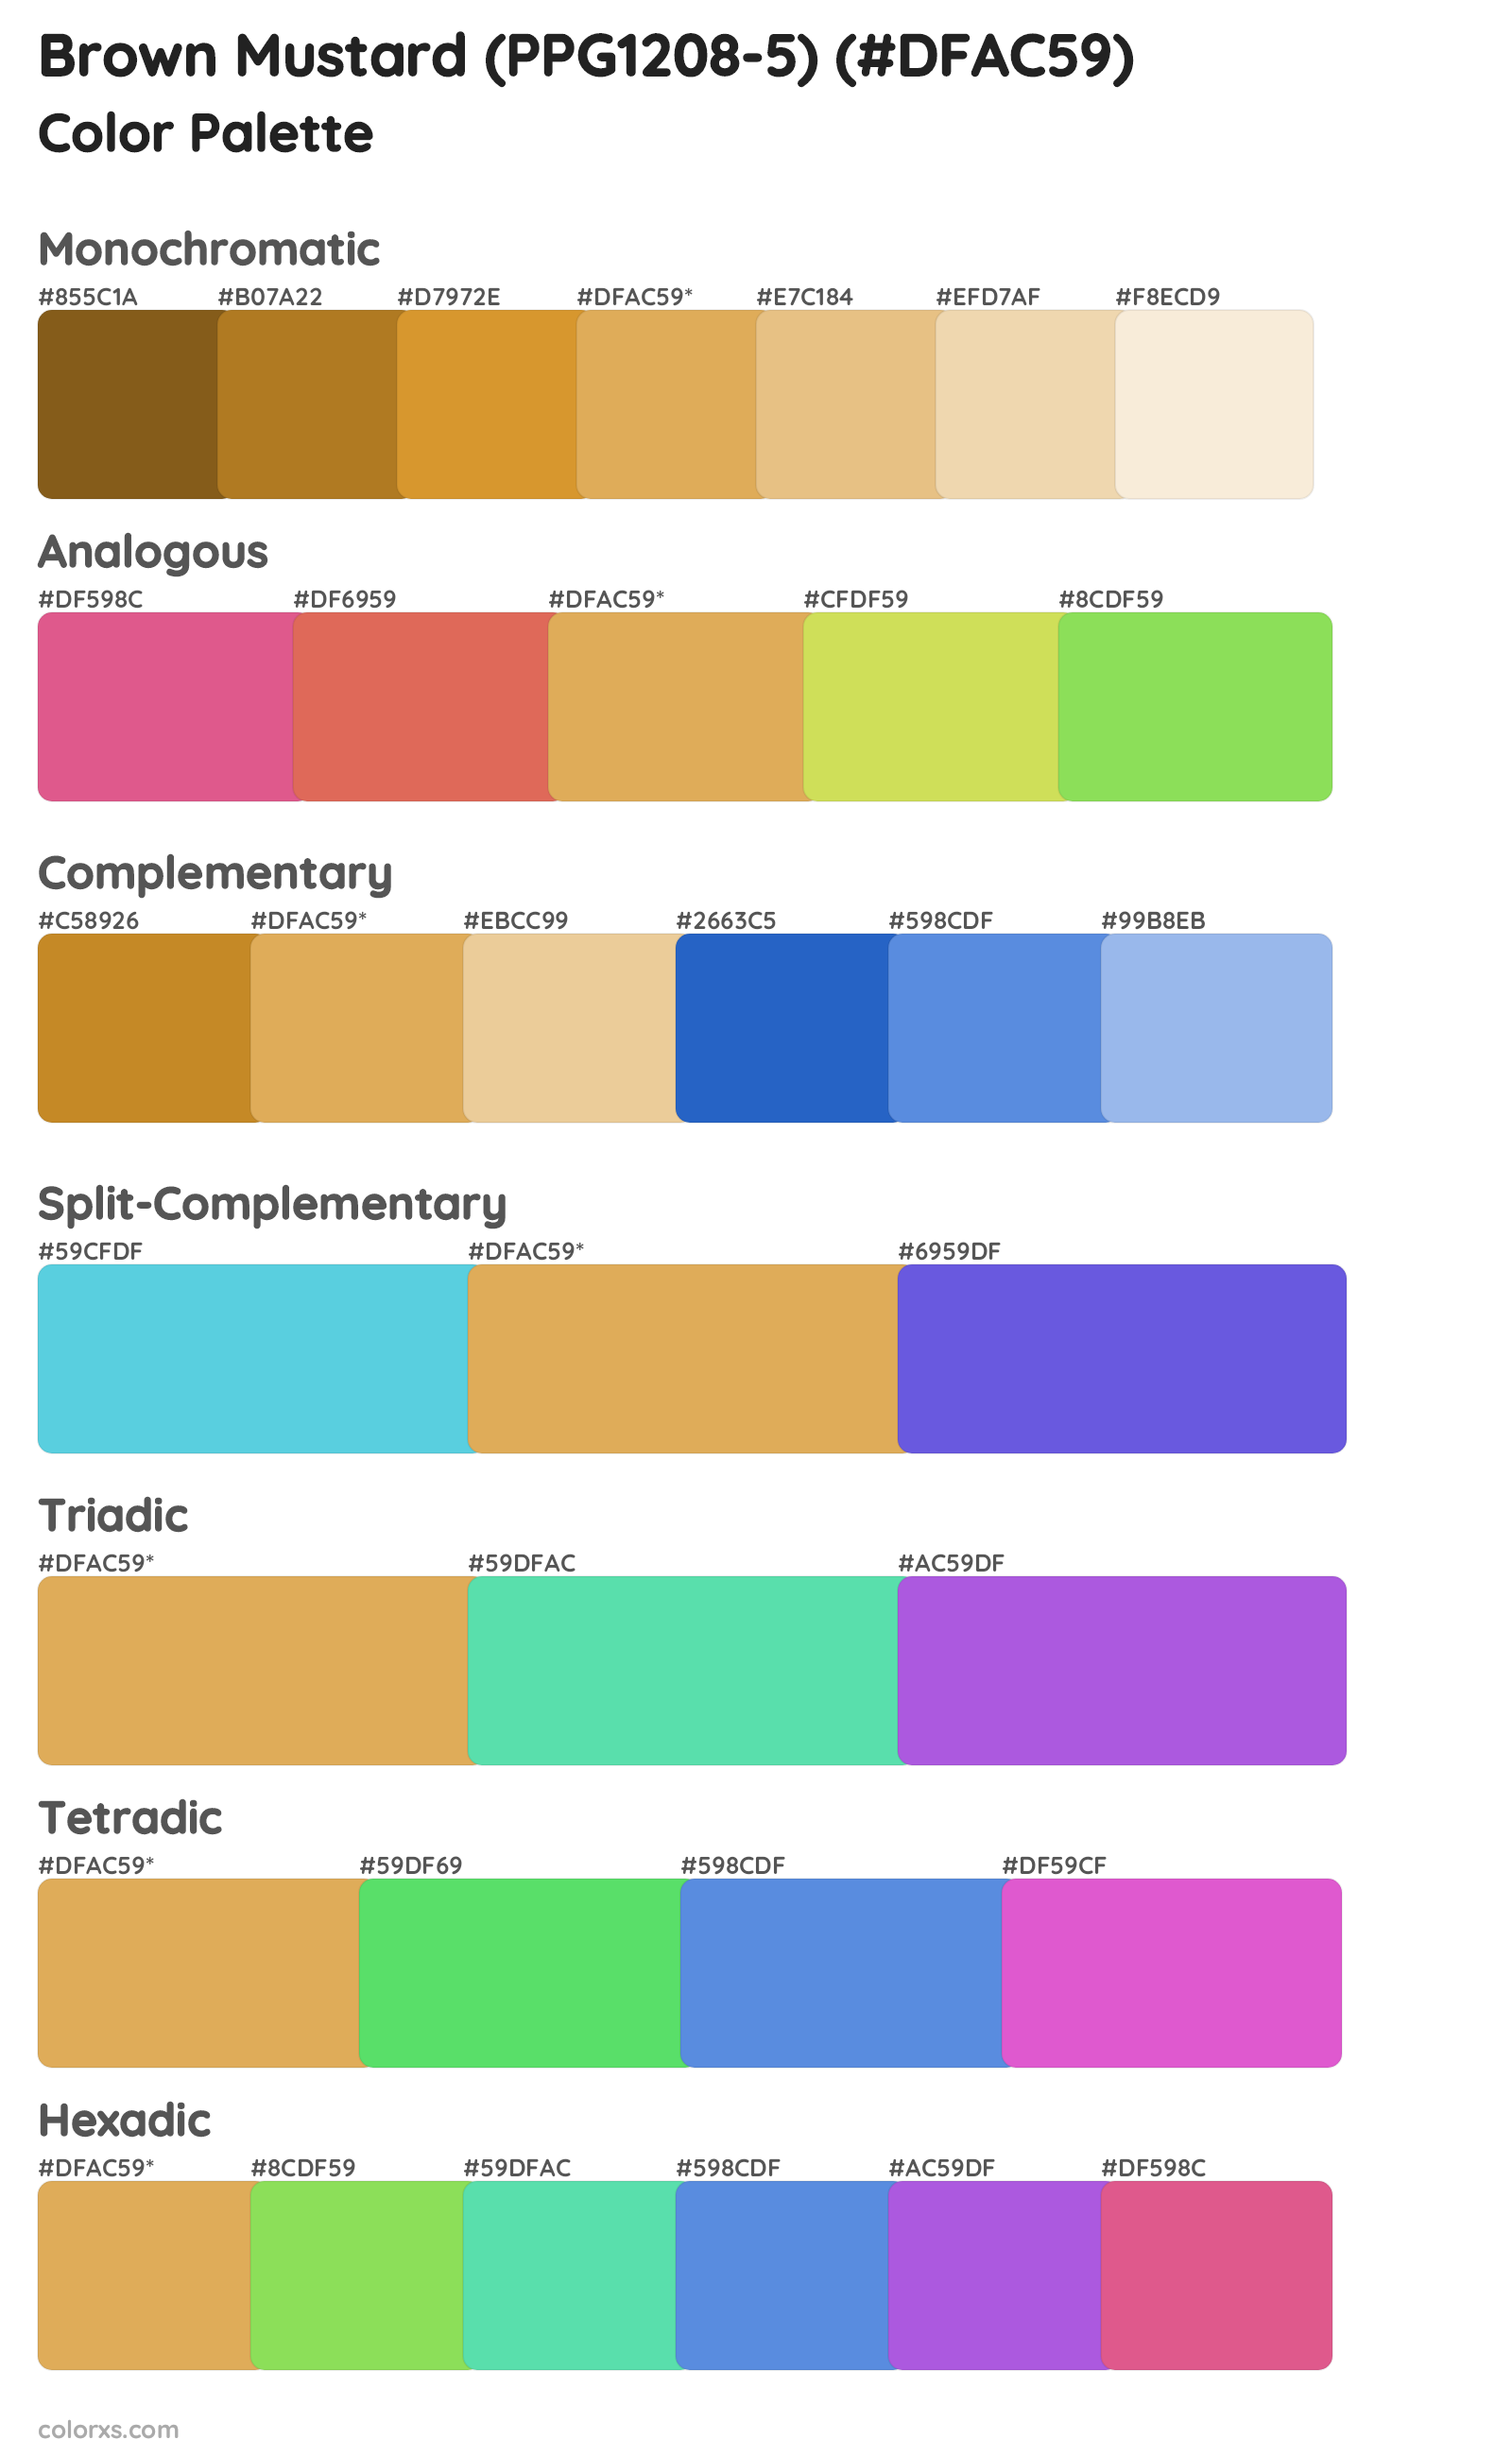 Brown Mustard (PPG1208-5) Color Scheme Palettes